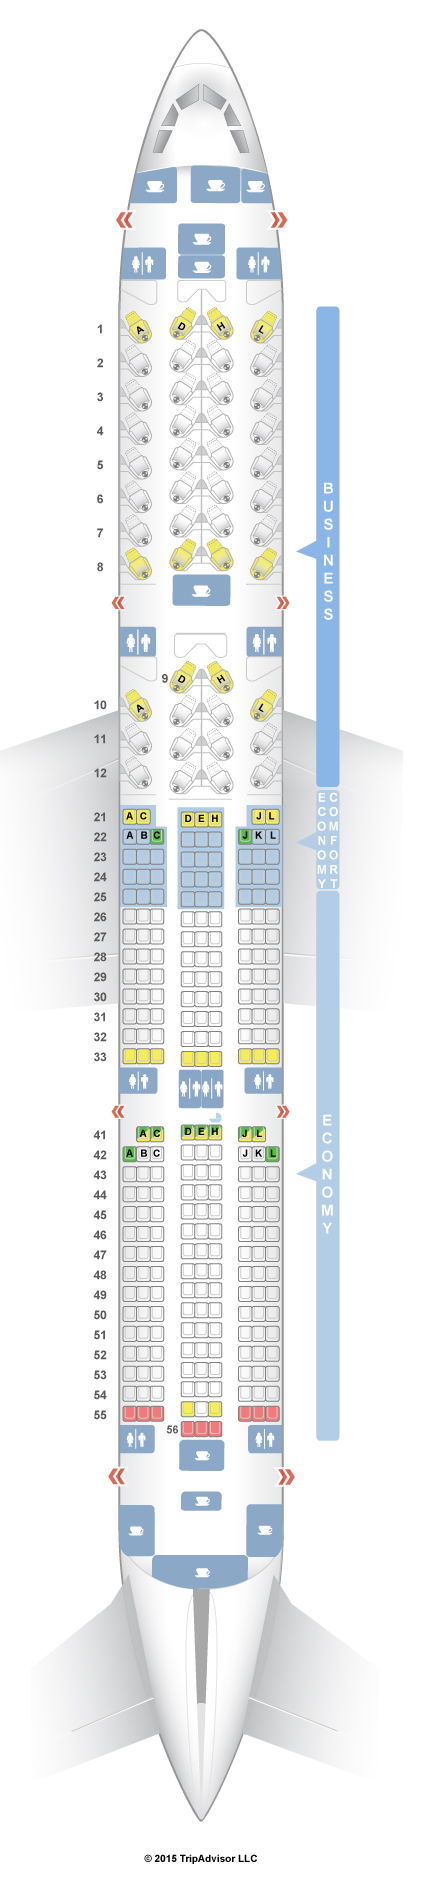 Secc Seating Chart